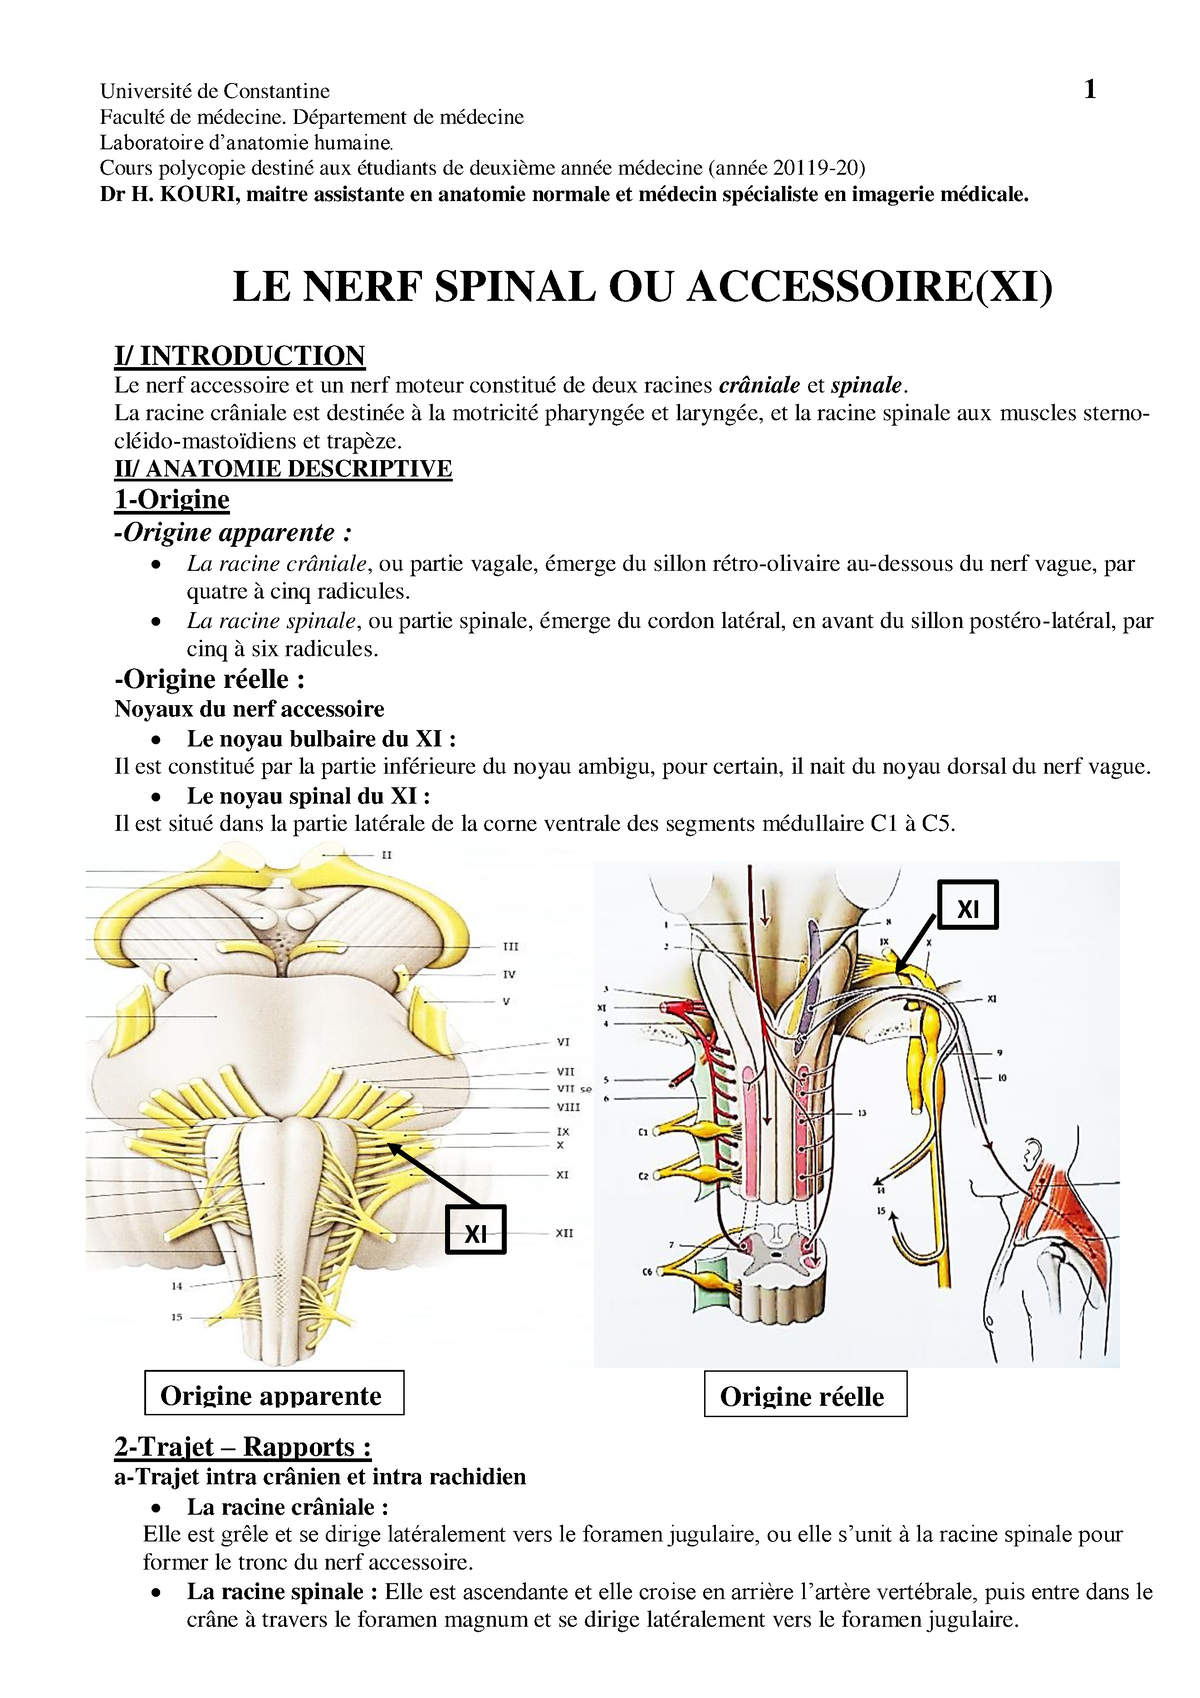 Anato 2an-nerf spinal 2020kouri - Université de Constantine 1